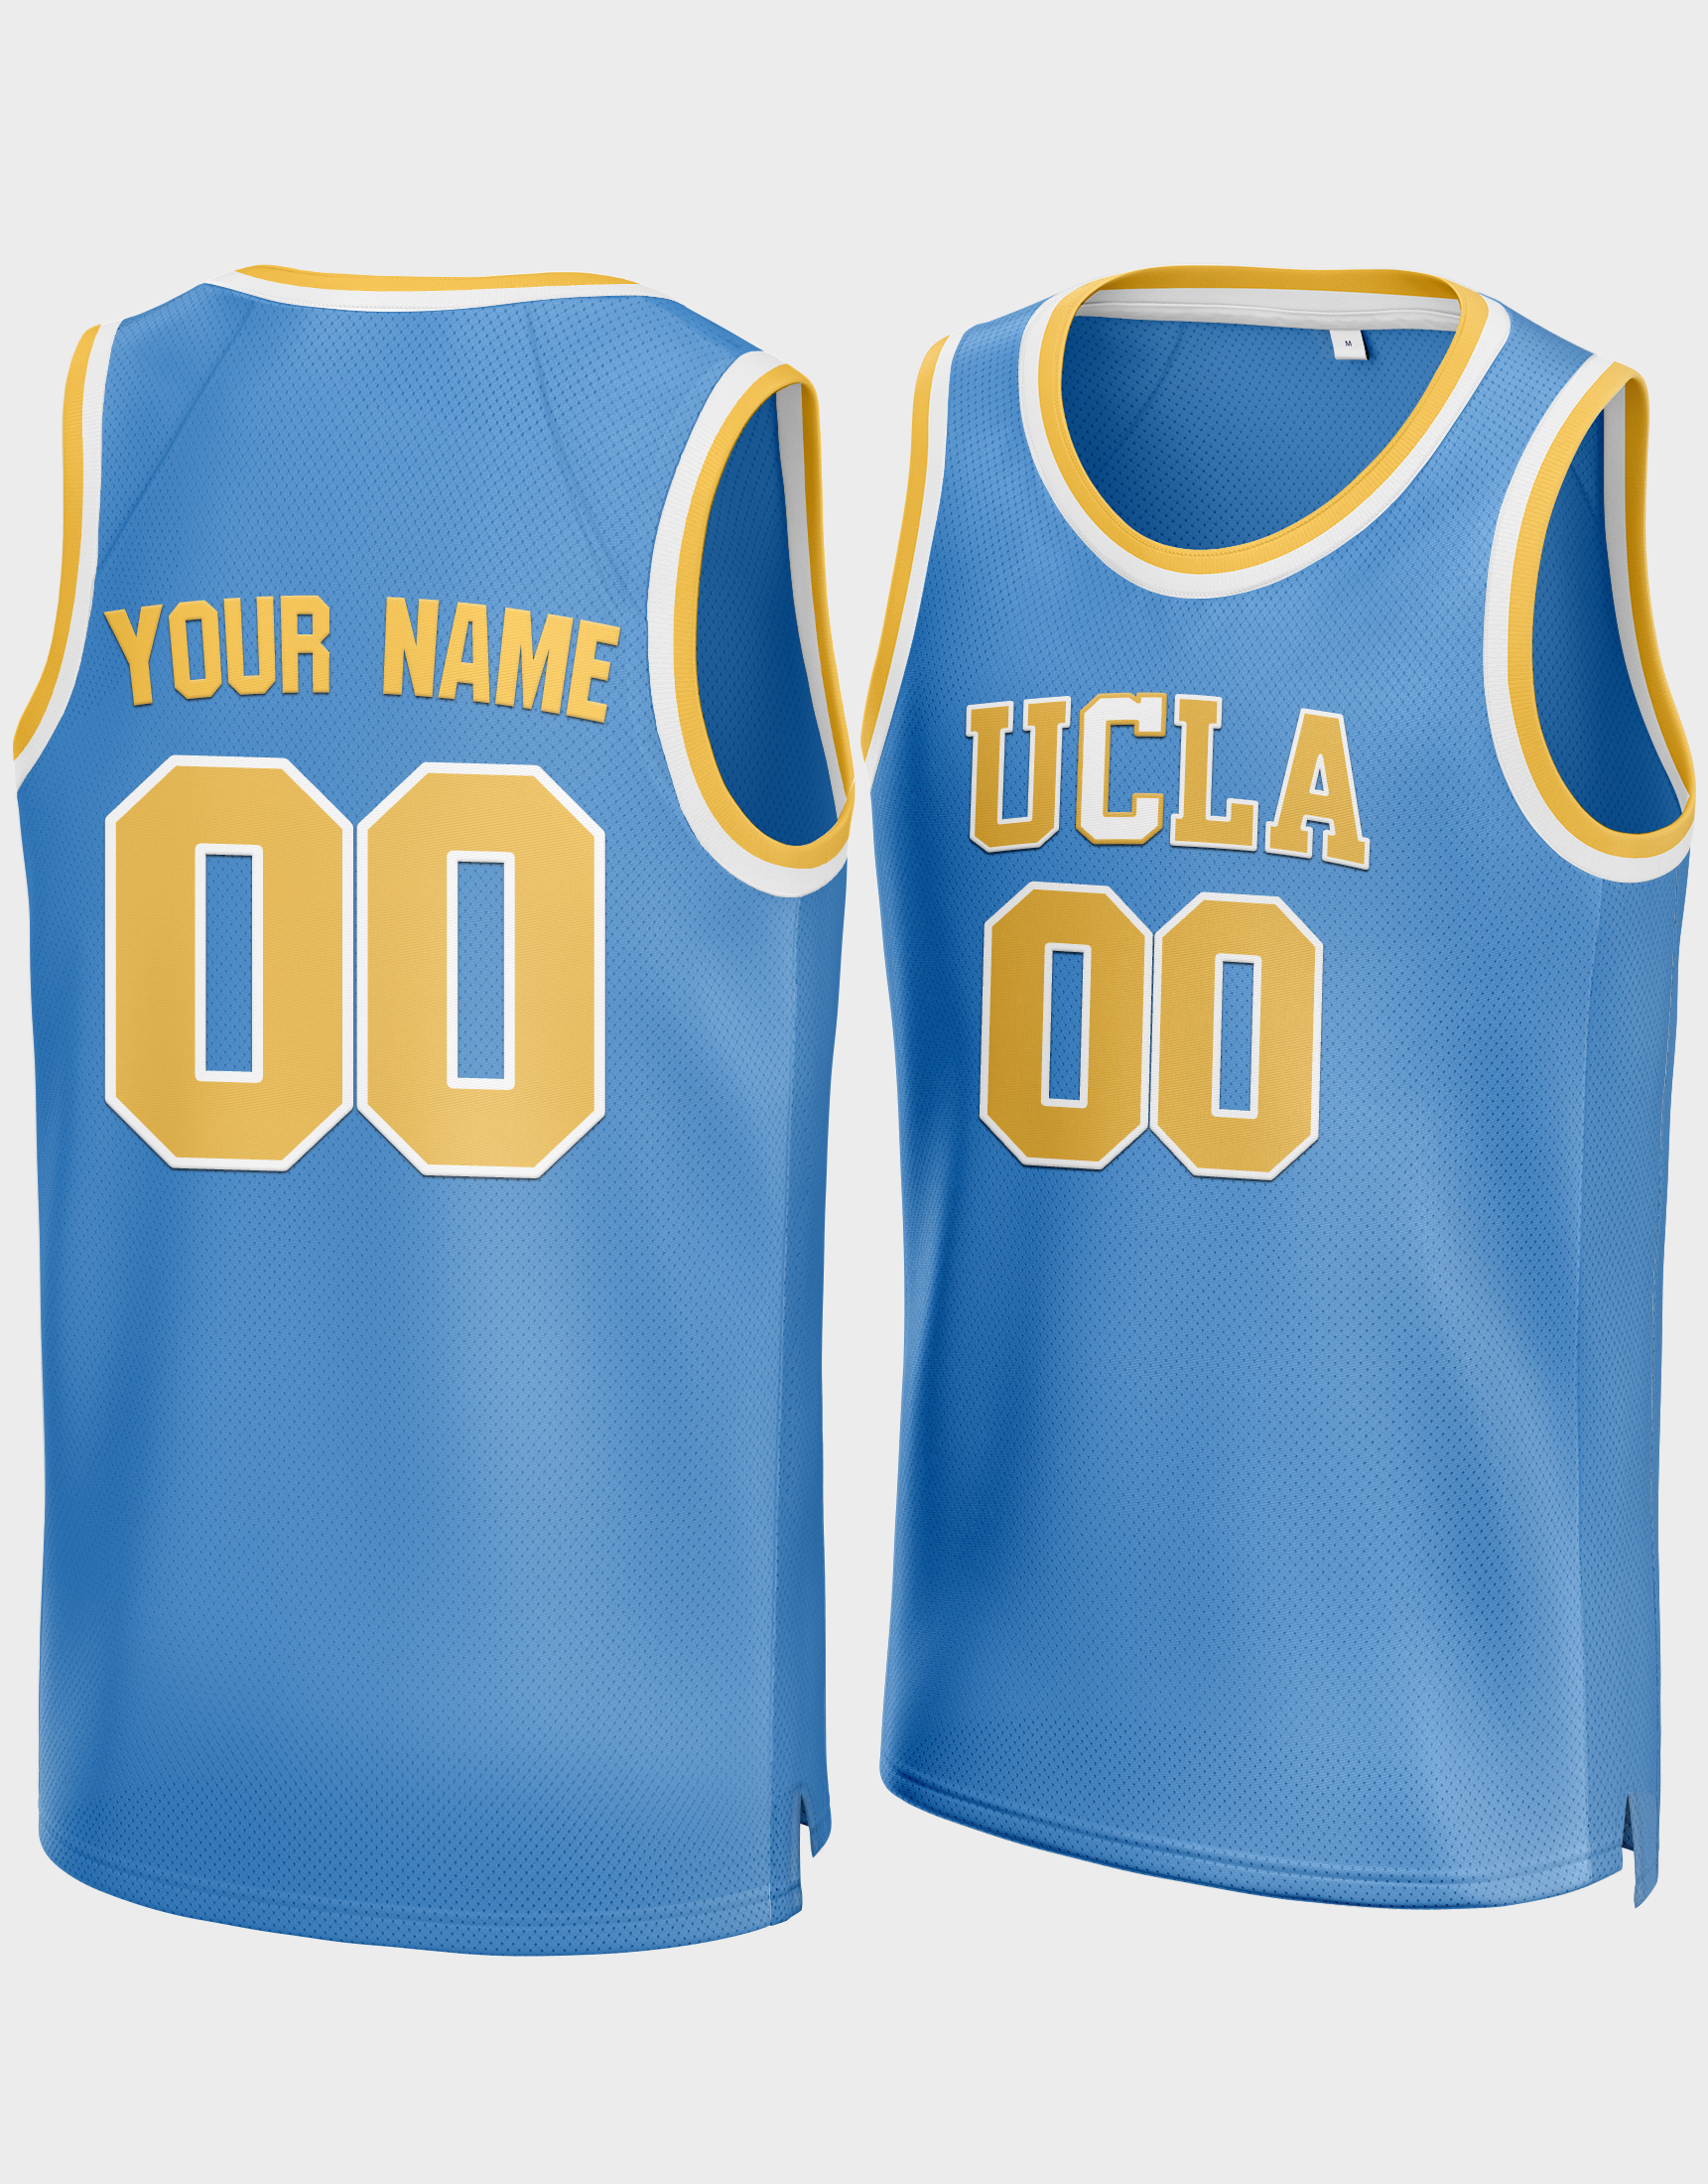 University of California Los Angeles Jerseys, UCLA Bruins Uniforms, Jersey